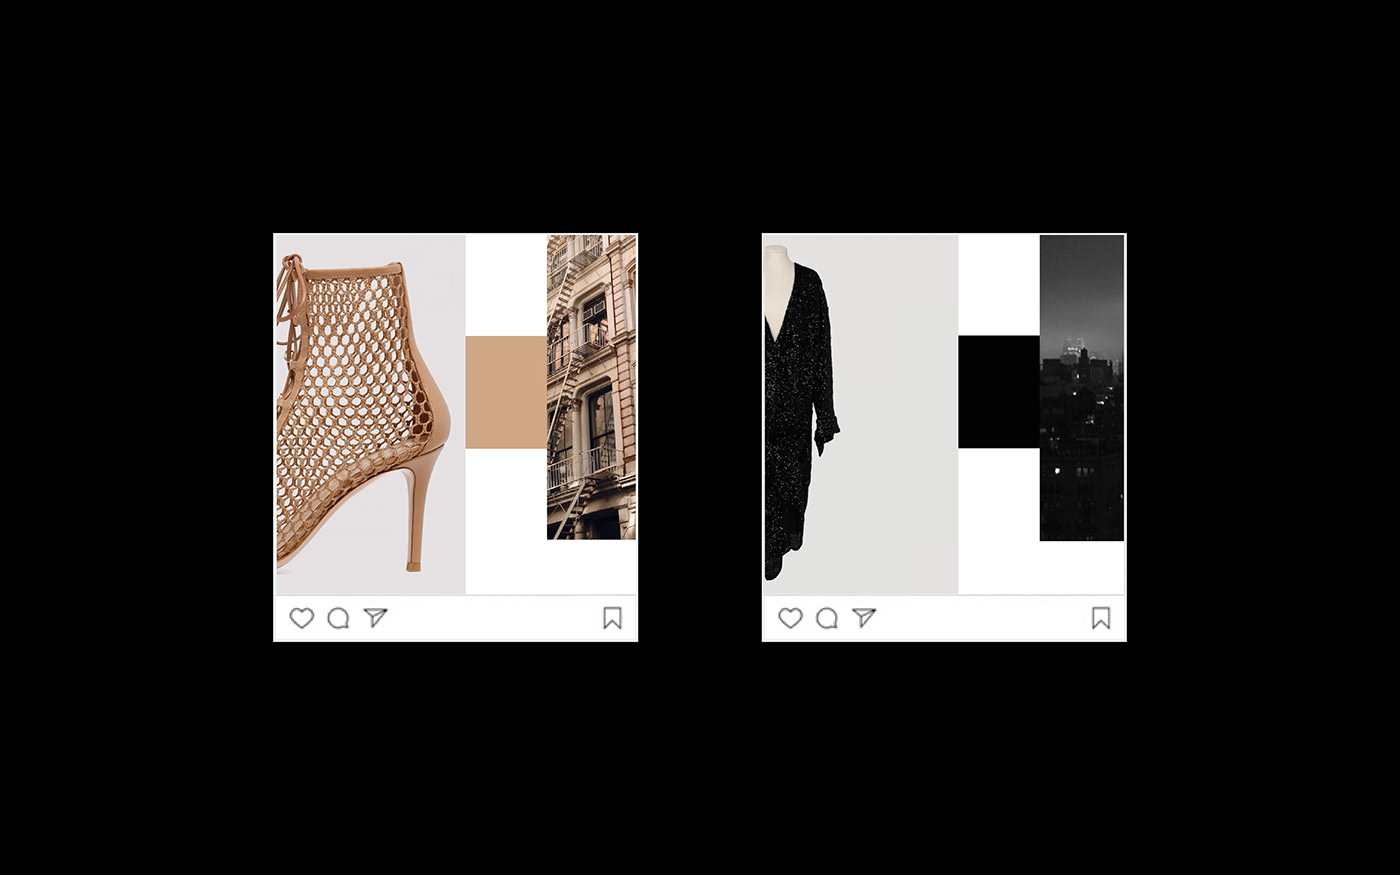 social media luxury Fashion  minimal brand e-commerce retouch moodboard product Clothing